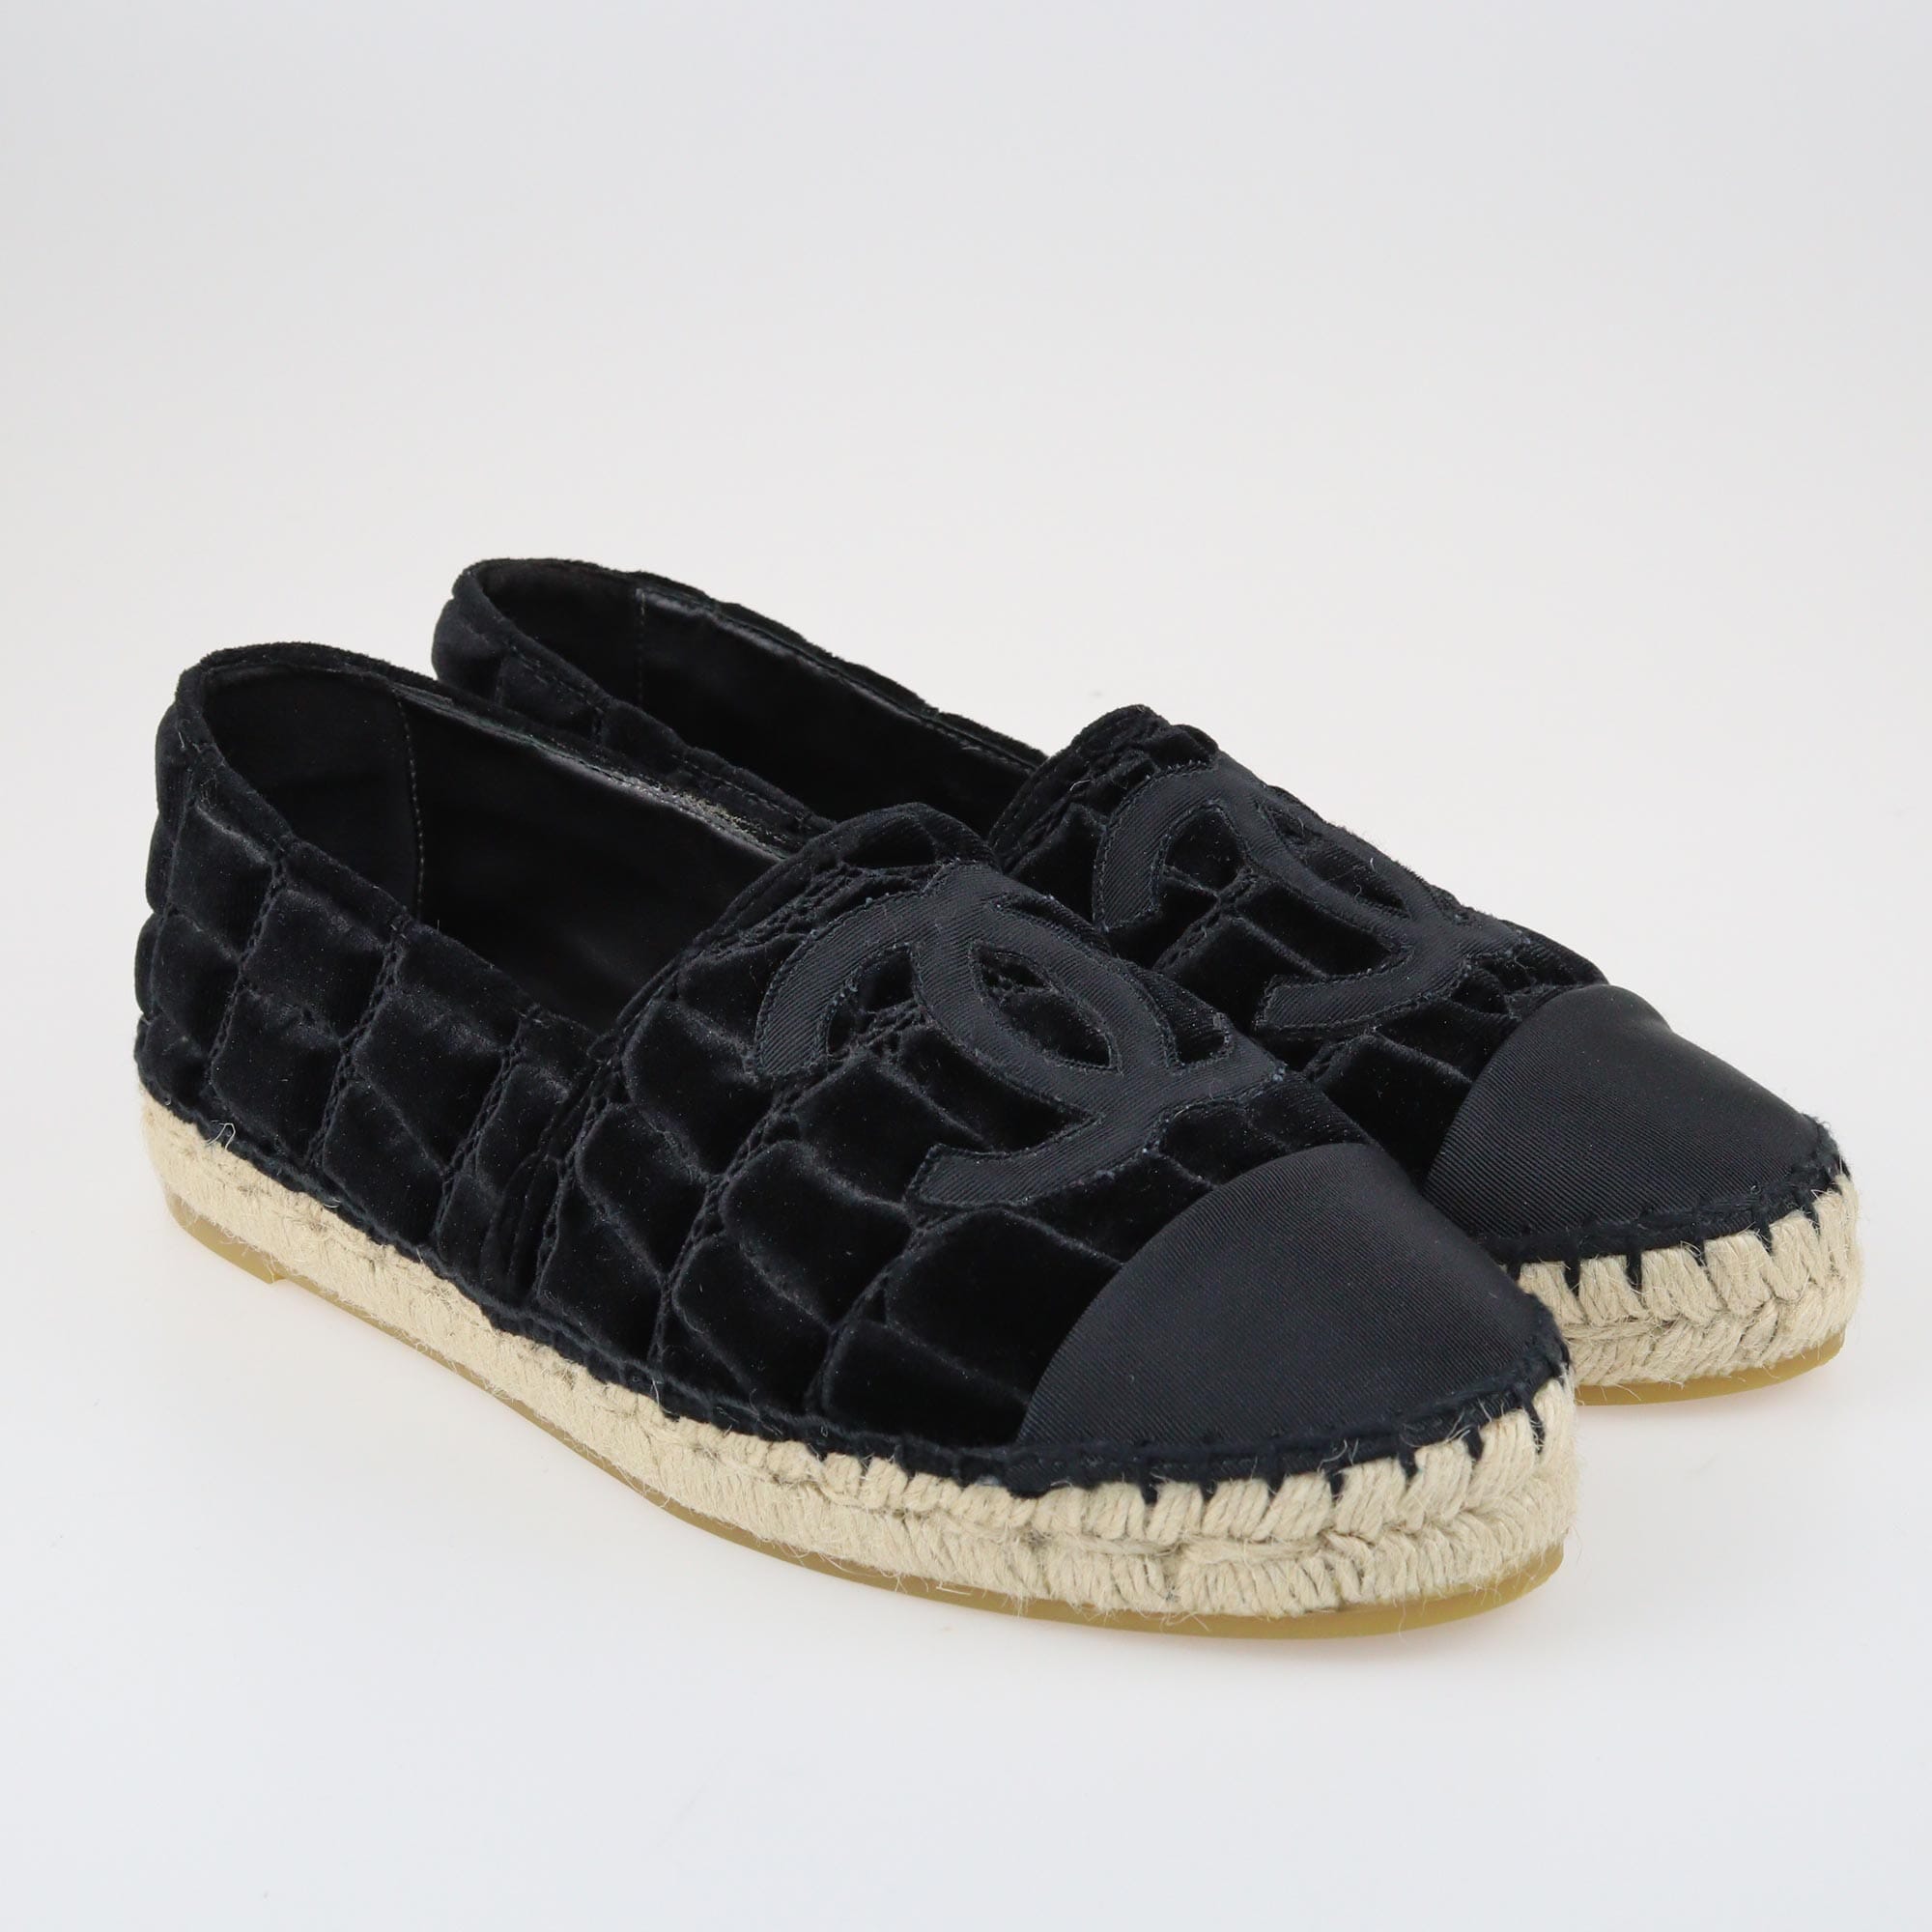 Chanel Black Espadrilles Flats Shoes Chanel 